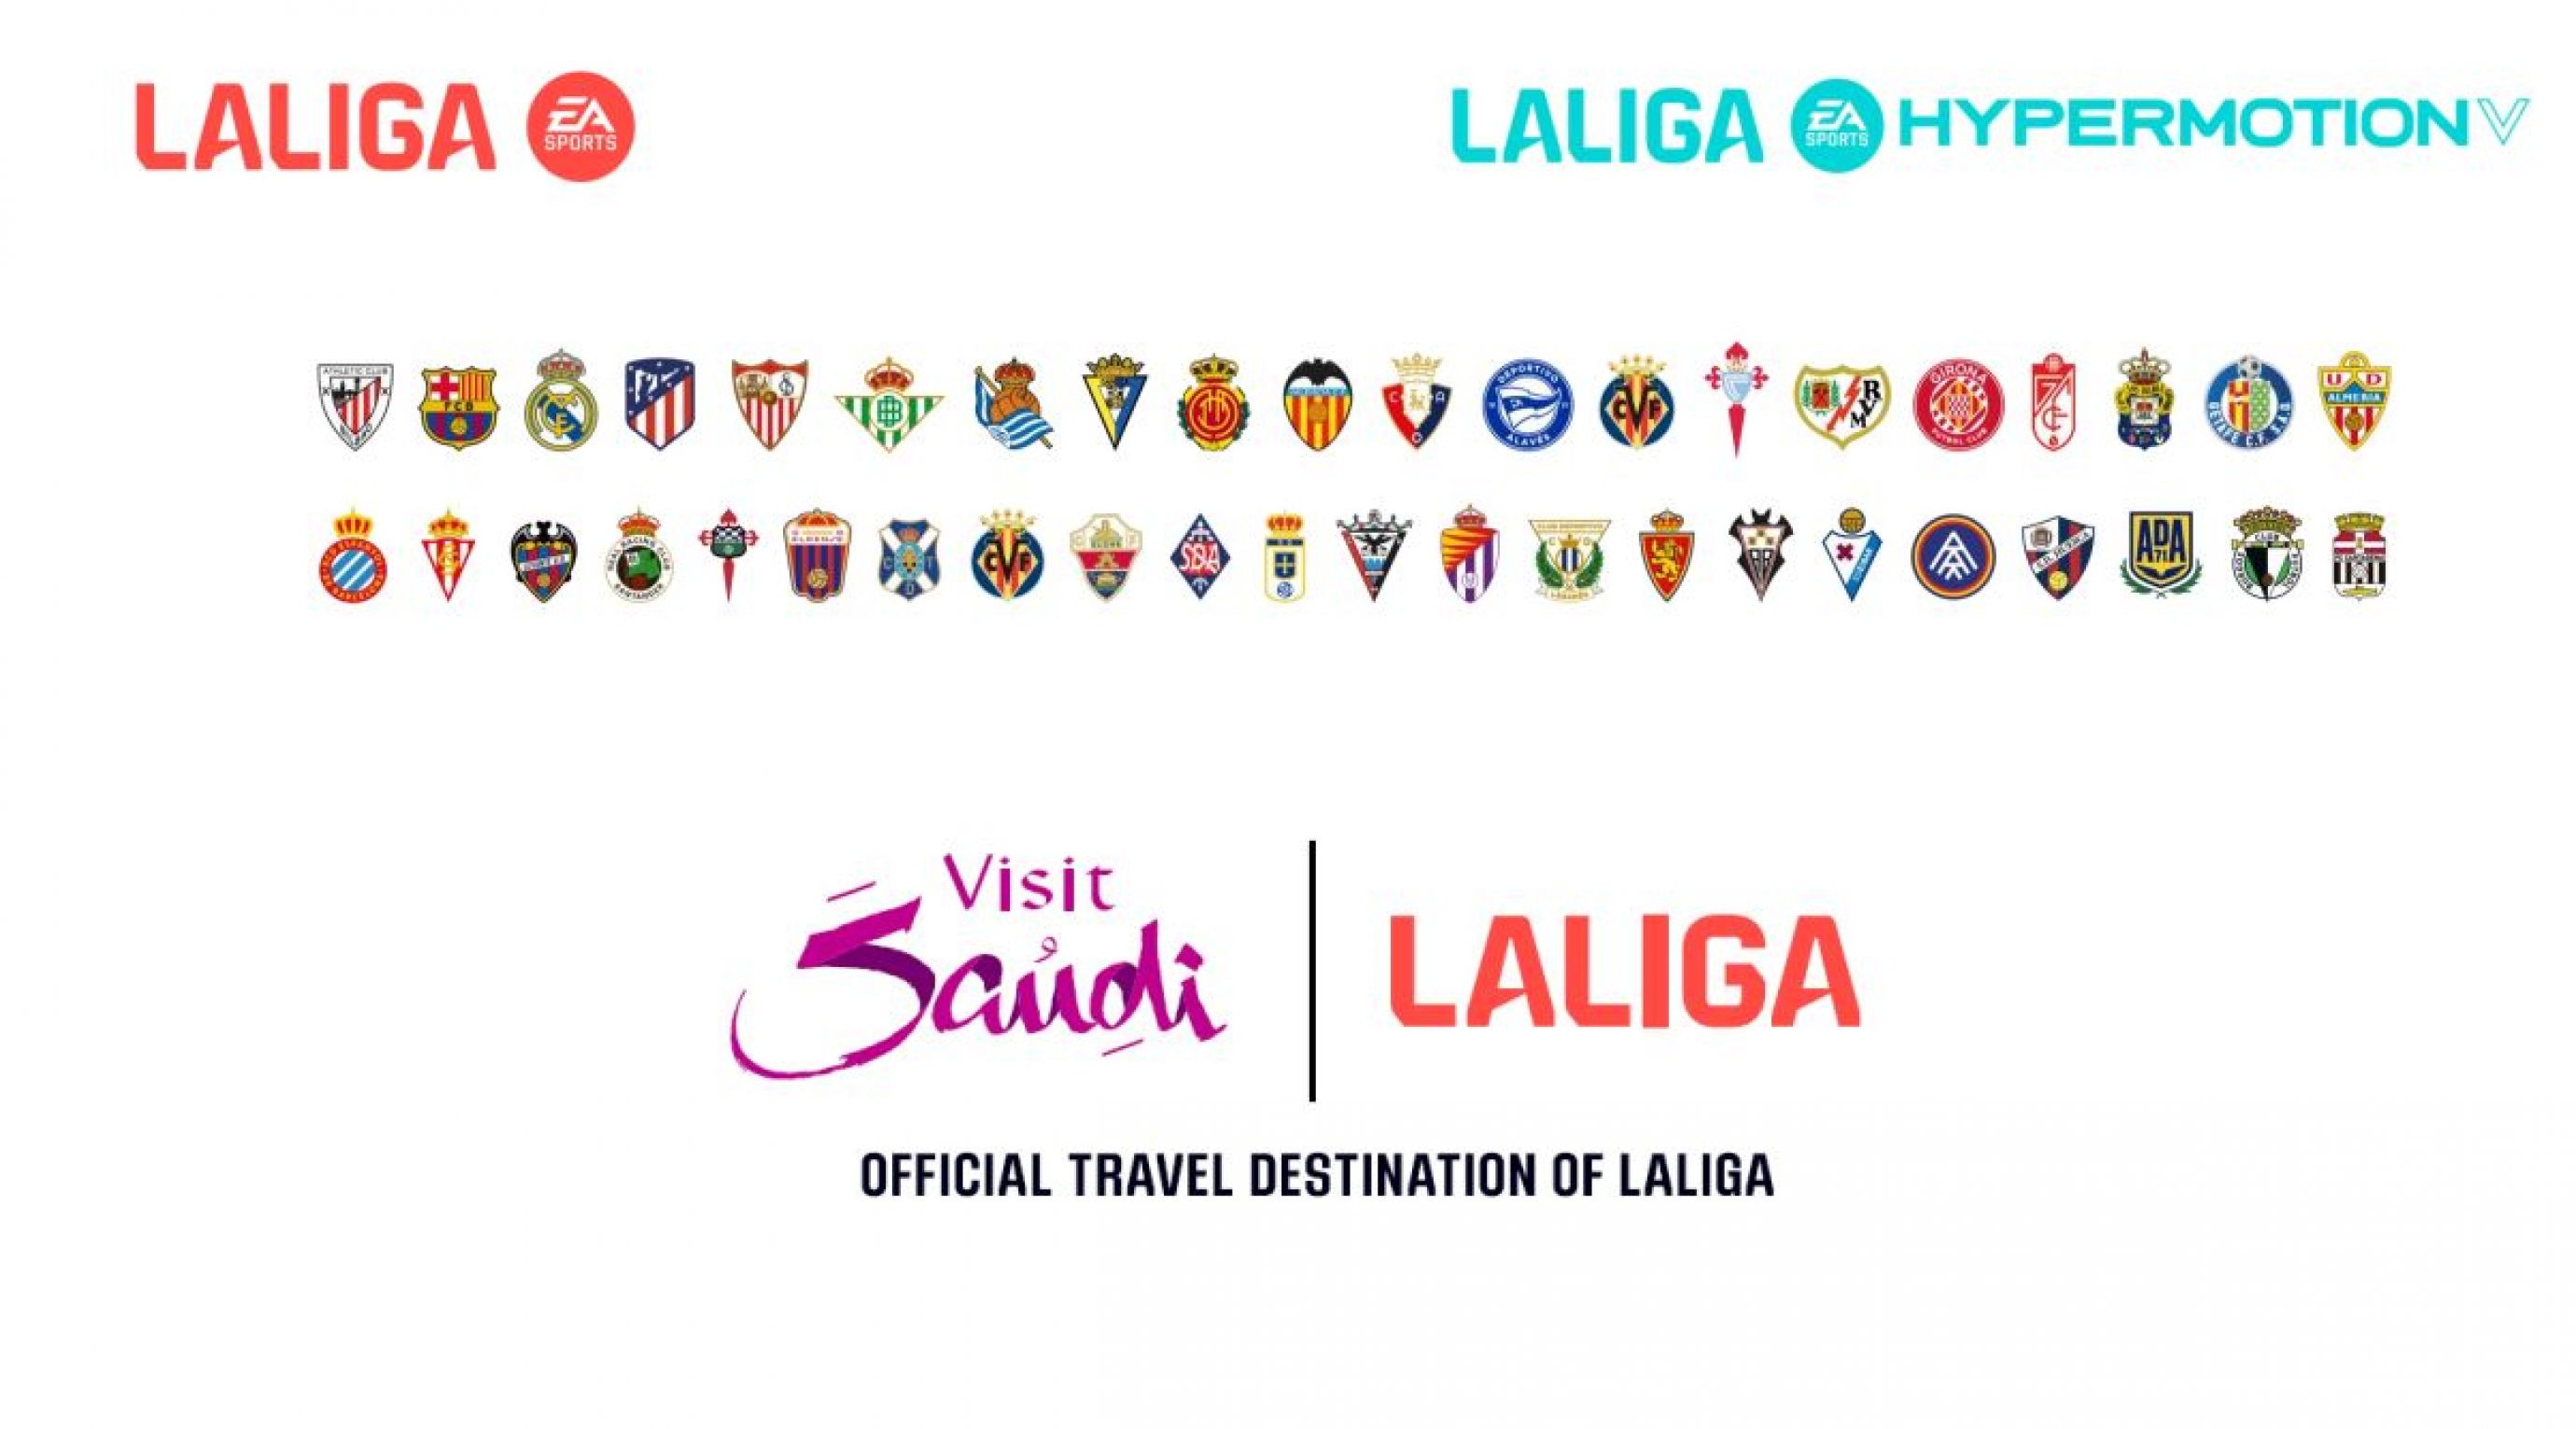 Overview of the 2022/2023 La Liga sponsors